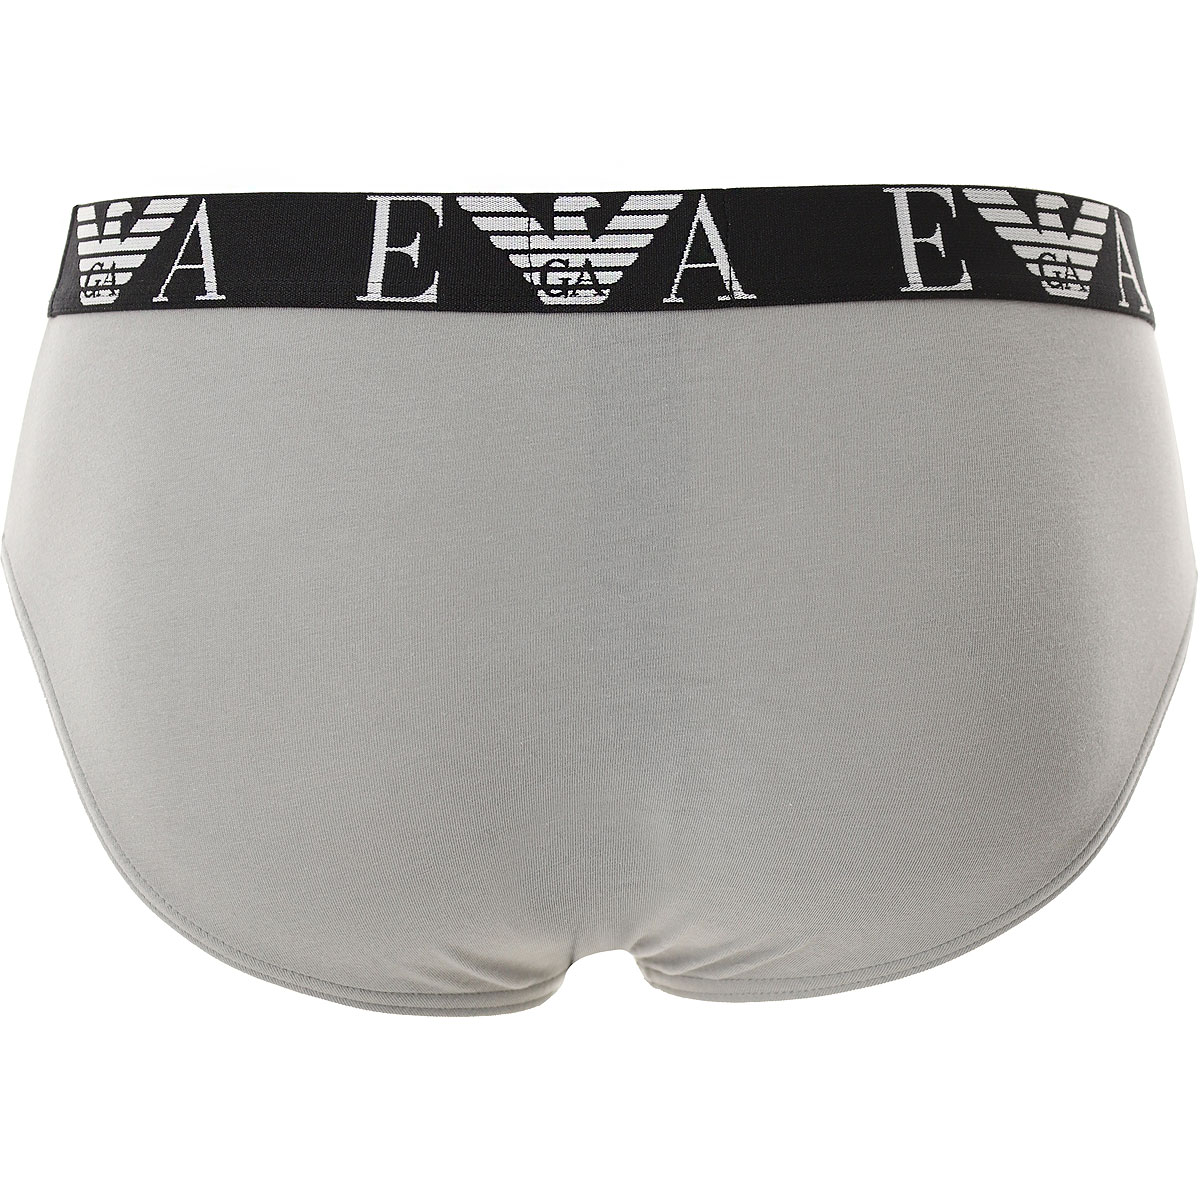 Mens Underwear Emporio Armani, Style code: 111734-2r723-13721